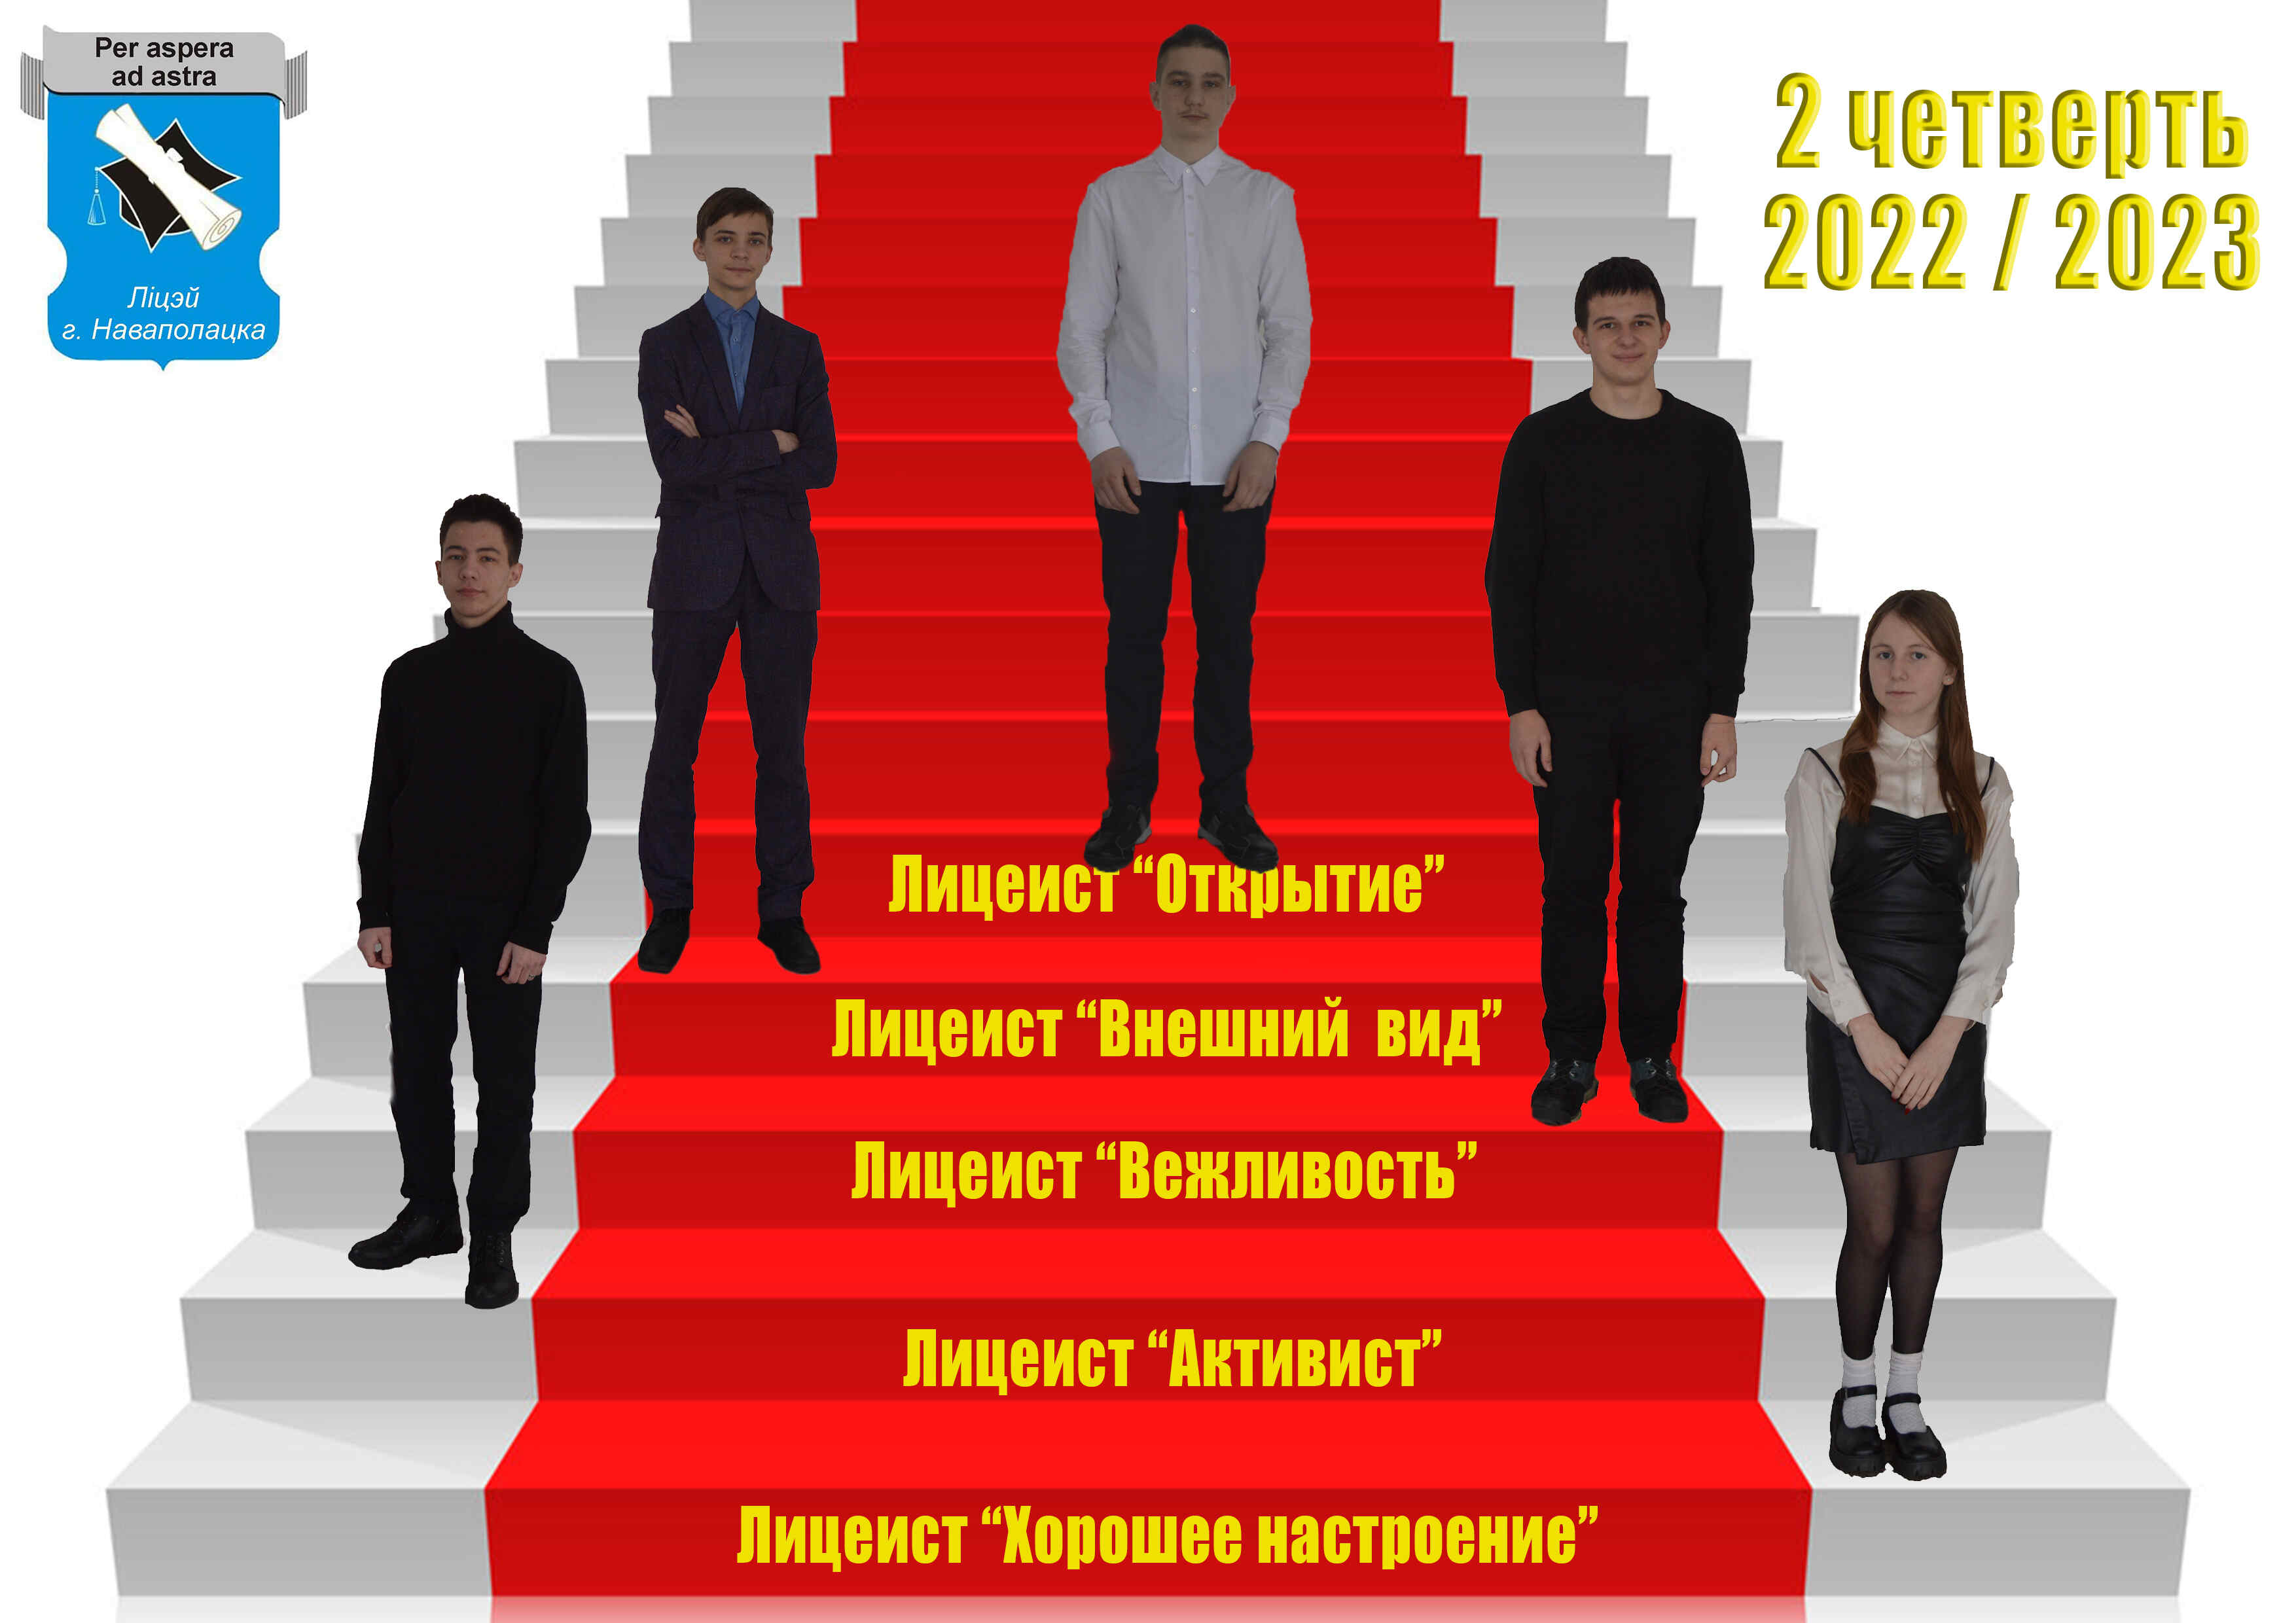 Лестница 2 четверть 2022-2023